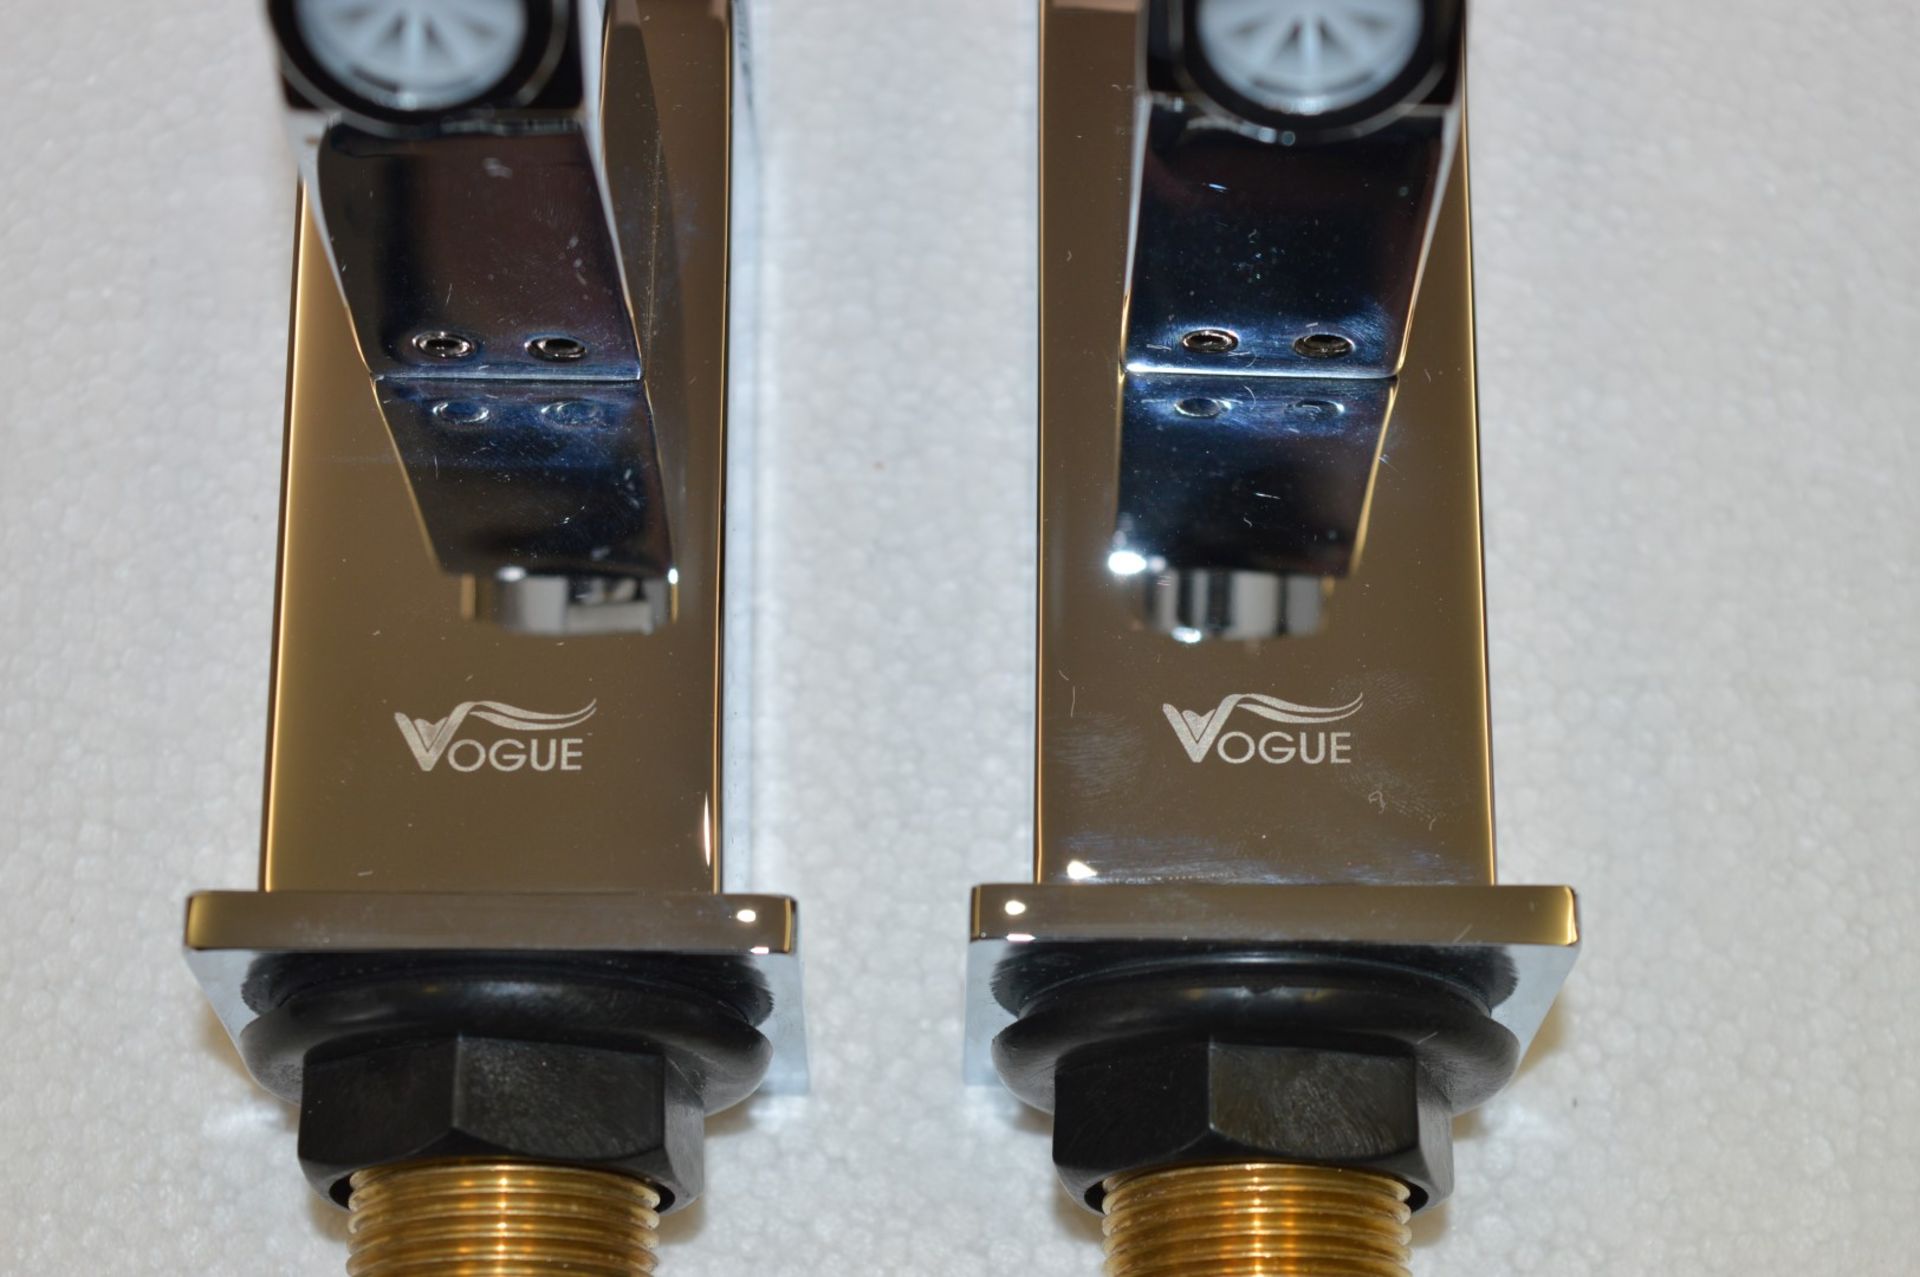 1 x Vogue Series 3 Bath Taps in Chrome (Pair) - Modern Bath Mixer Tap in Bright Chrome - High - Image 8 of 11